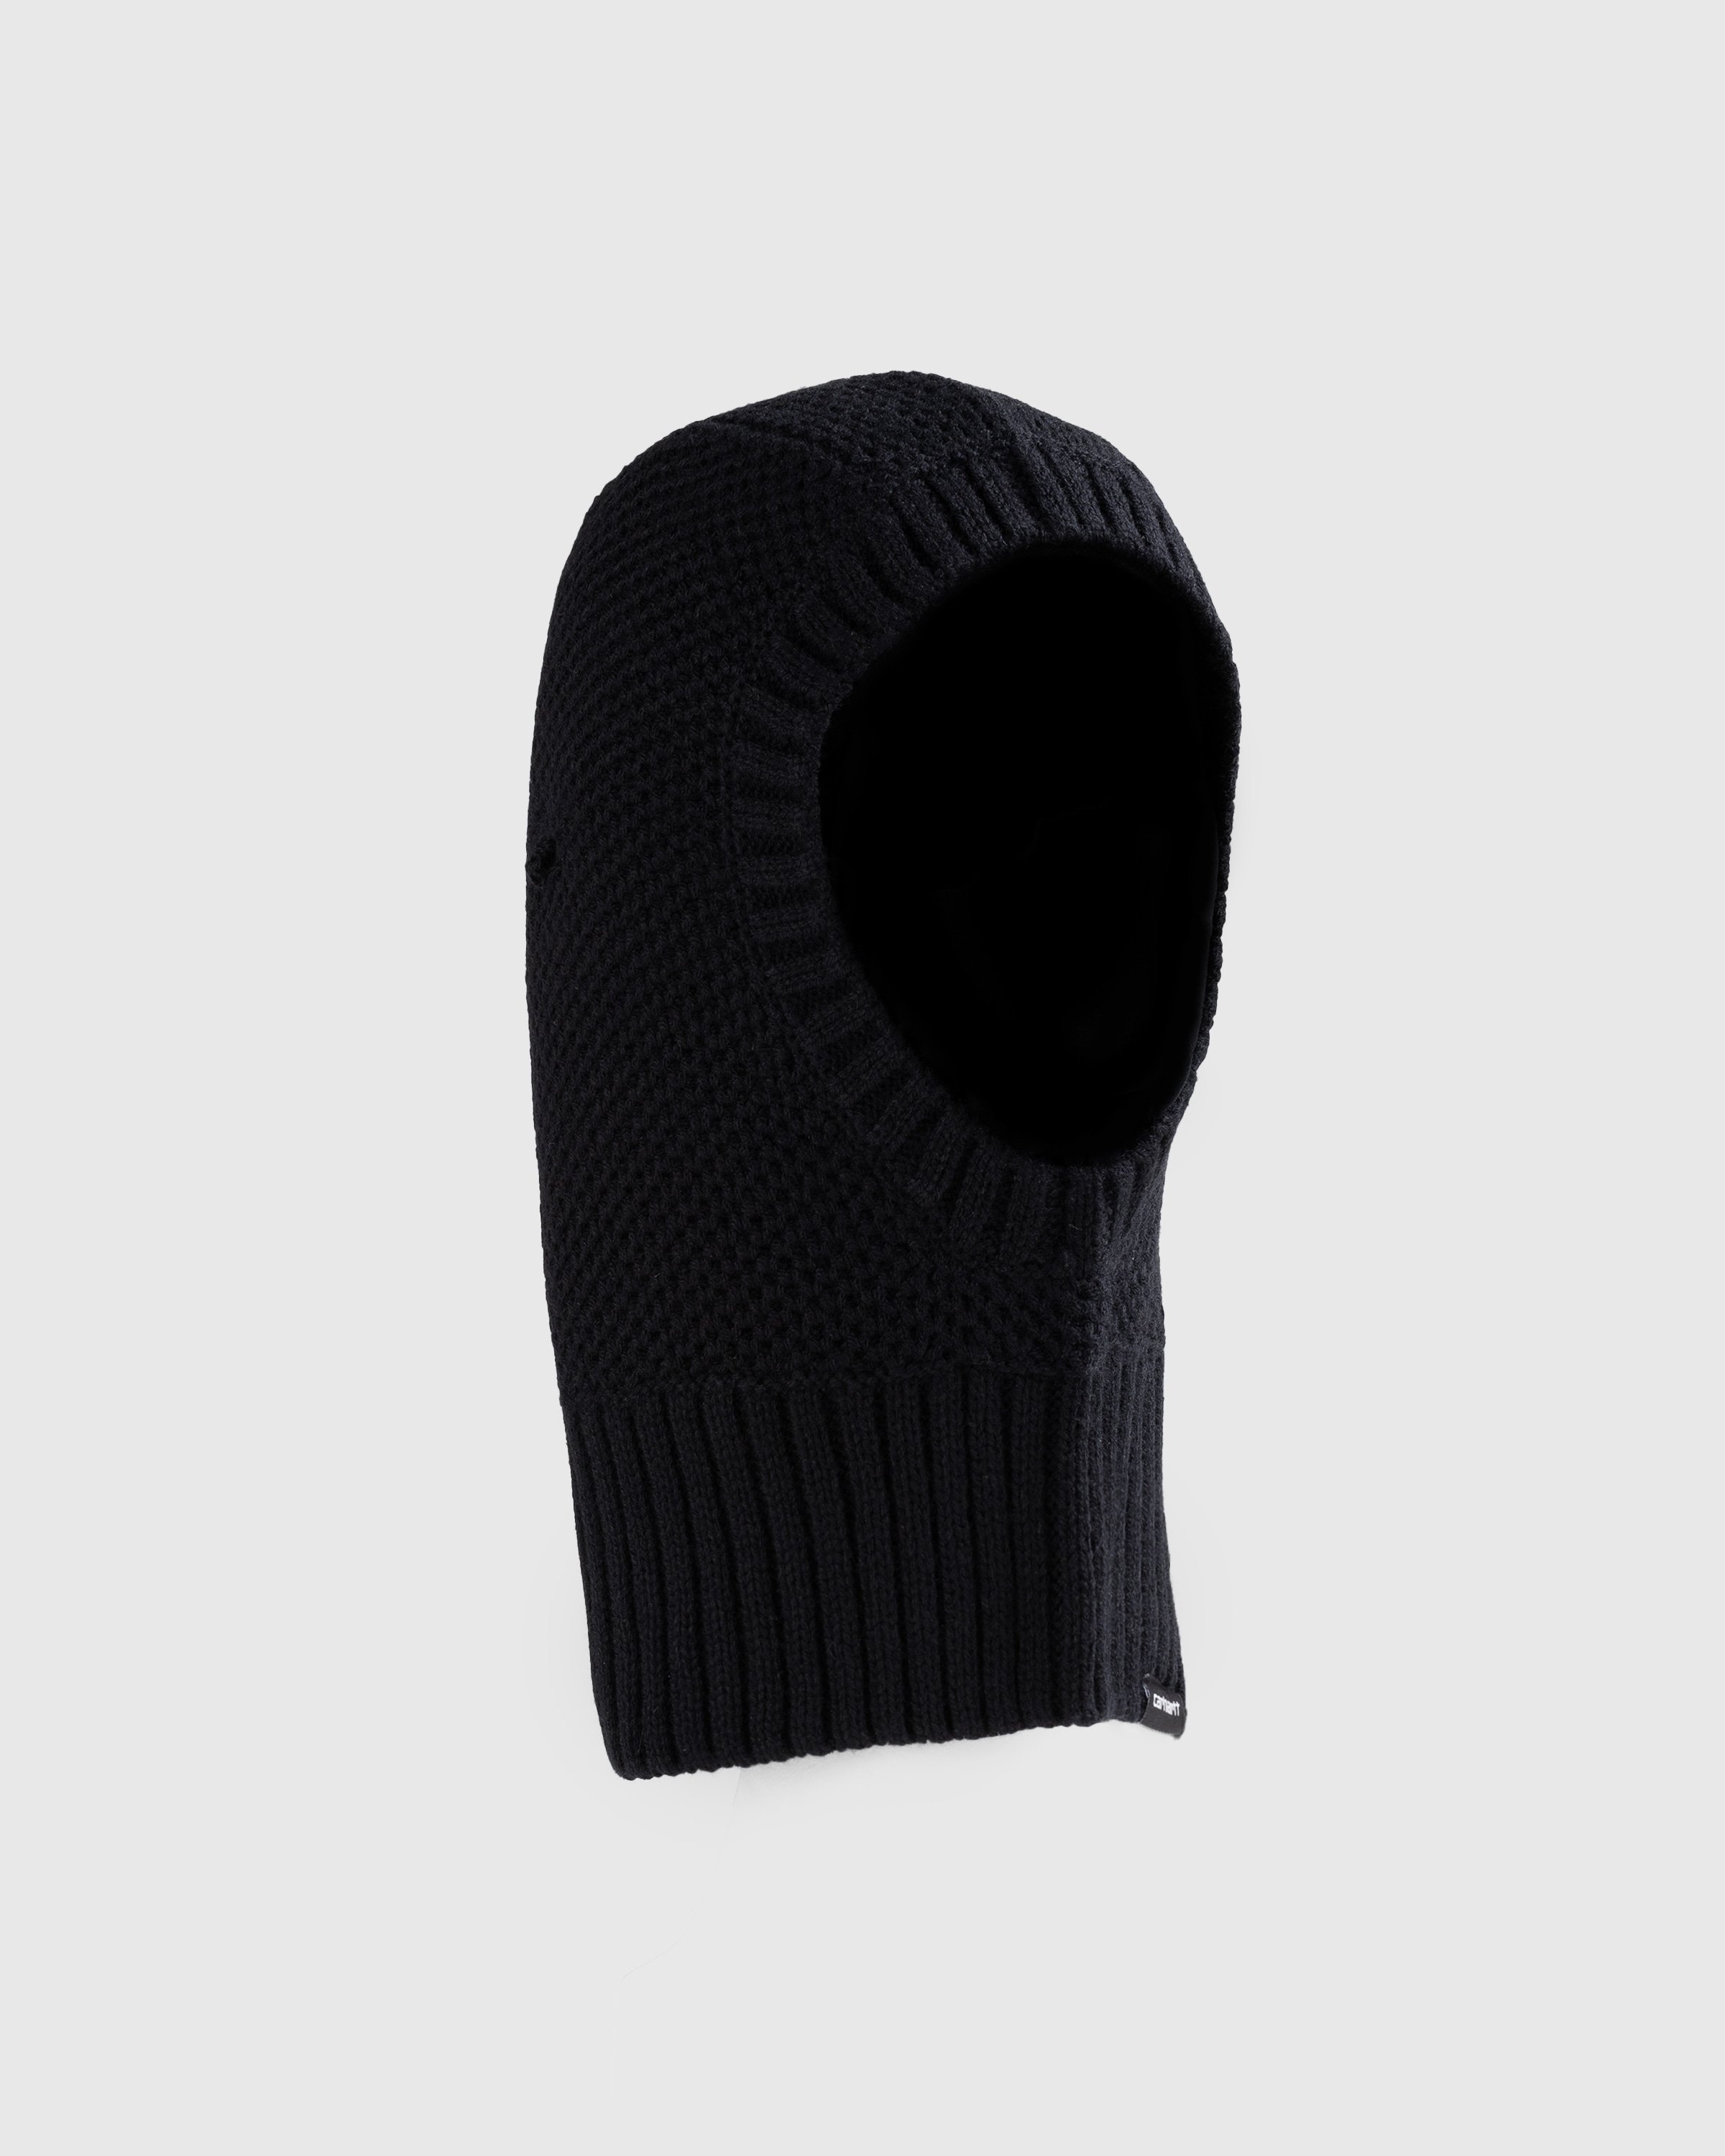 Carhartt WIP – Remi Hood Black - Hats - Black - Image 3